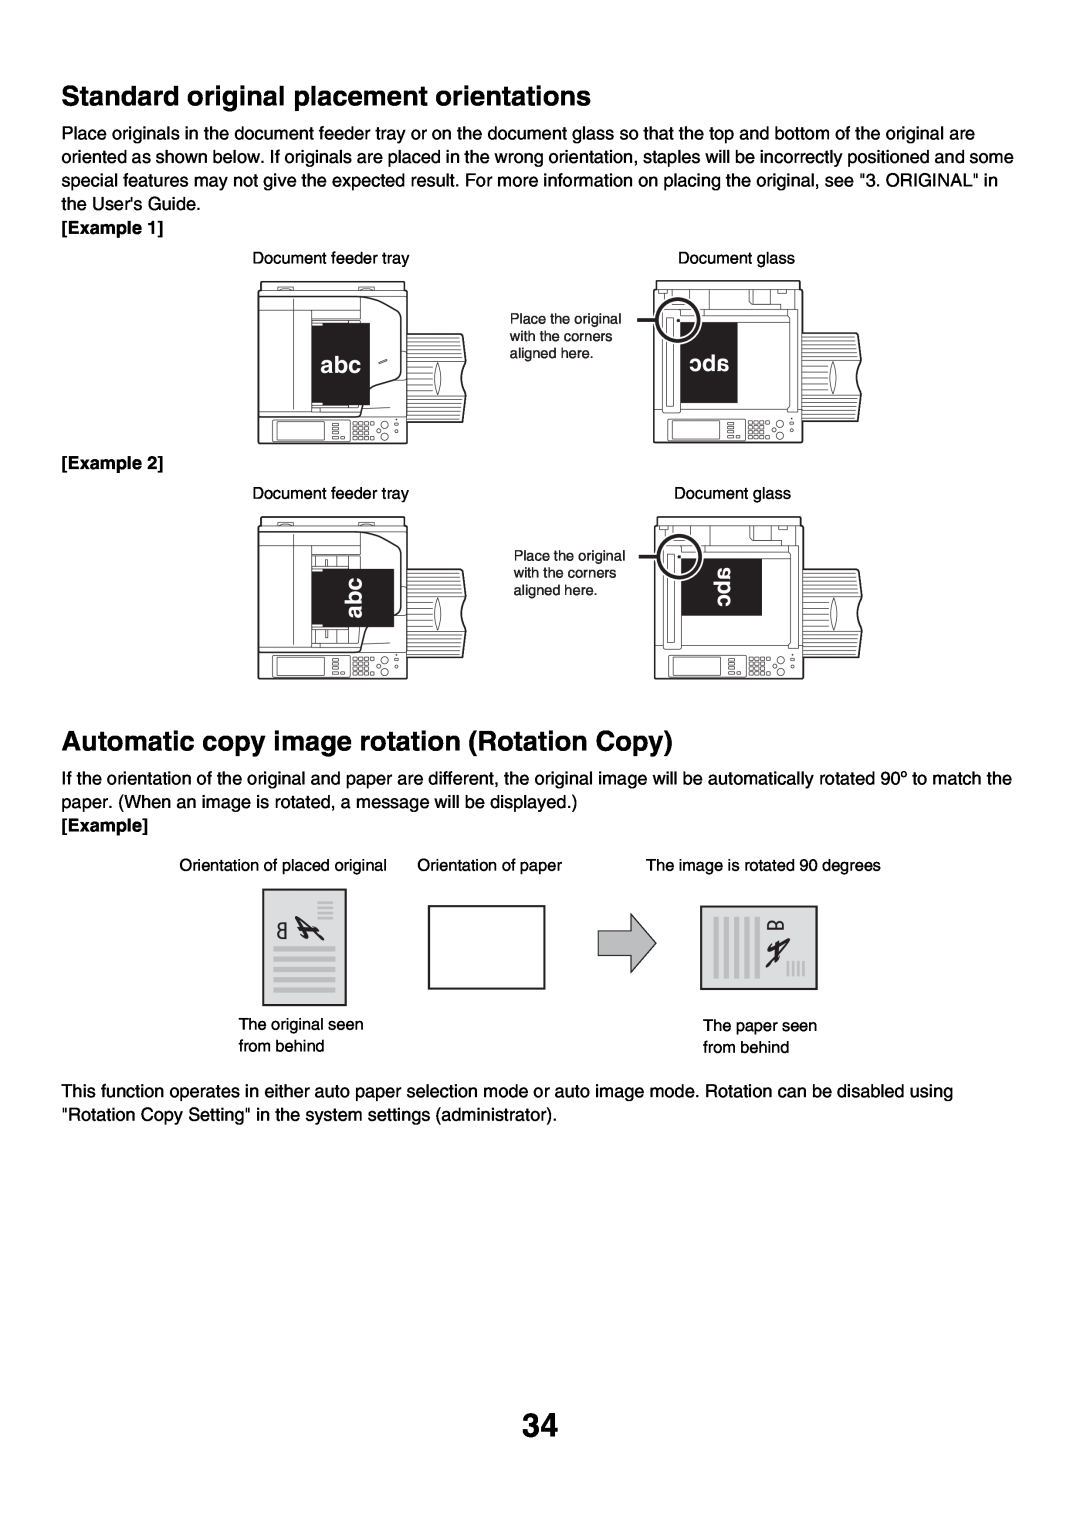 Sharp MX-3501N, MX-4501N, MX-2700N Standard original placement orientations, Automatic copy image rotation Rotation Copy 